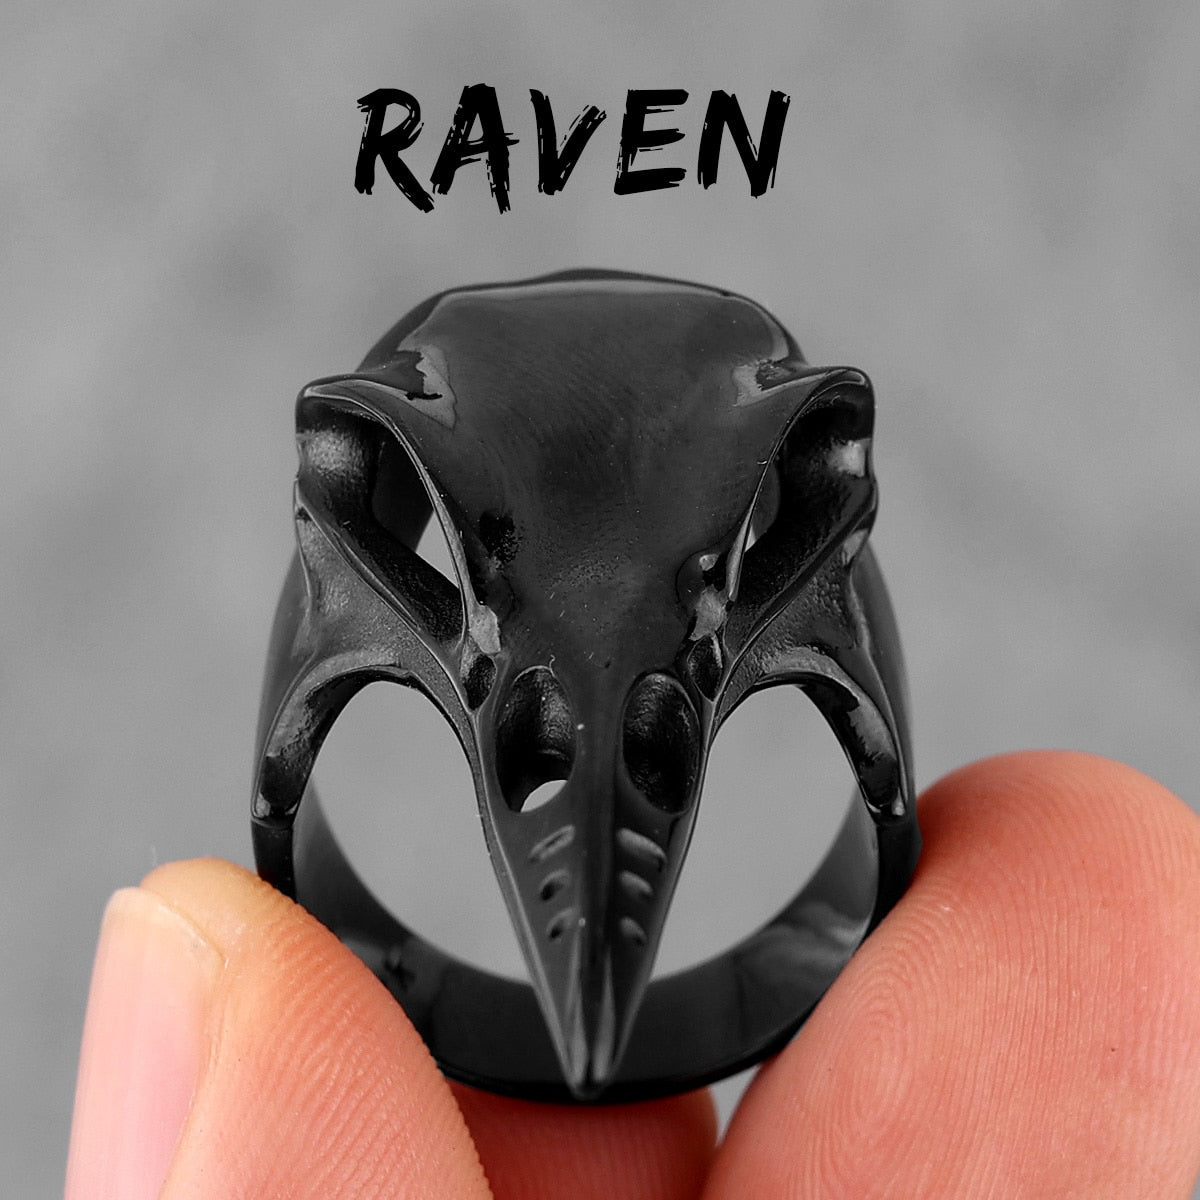 Viking Crow Skull Stainless Steel Mens Rings Punk Amulet Gothic for Male Boyfriend Biker Jewelry Creativity Gift R705-Black